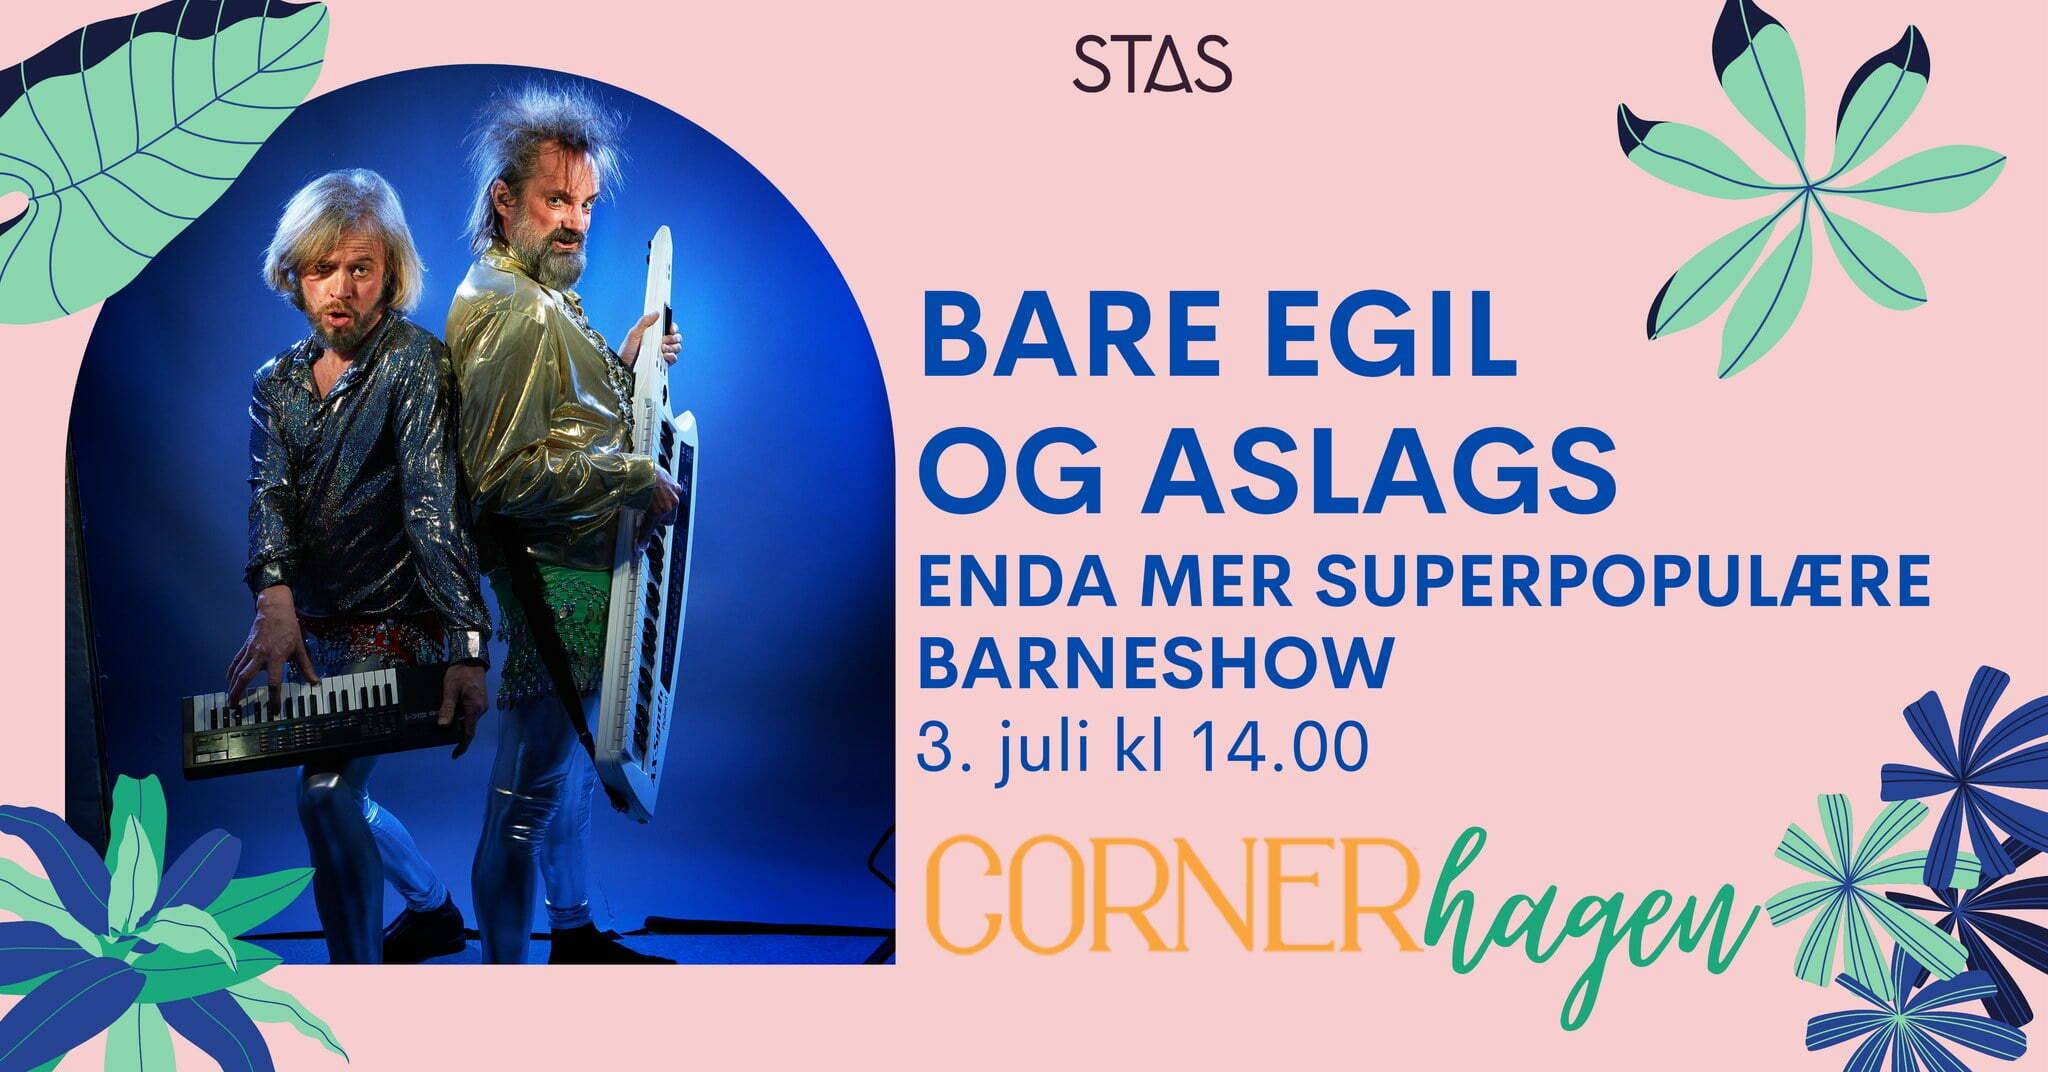 Bare Egil og Aslags enda mer superpopulære barneshow i Cornerhagen  - Stas 